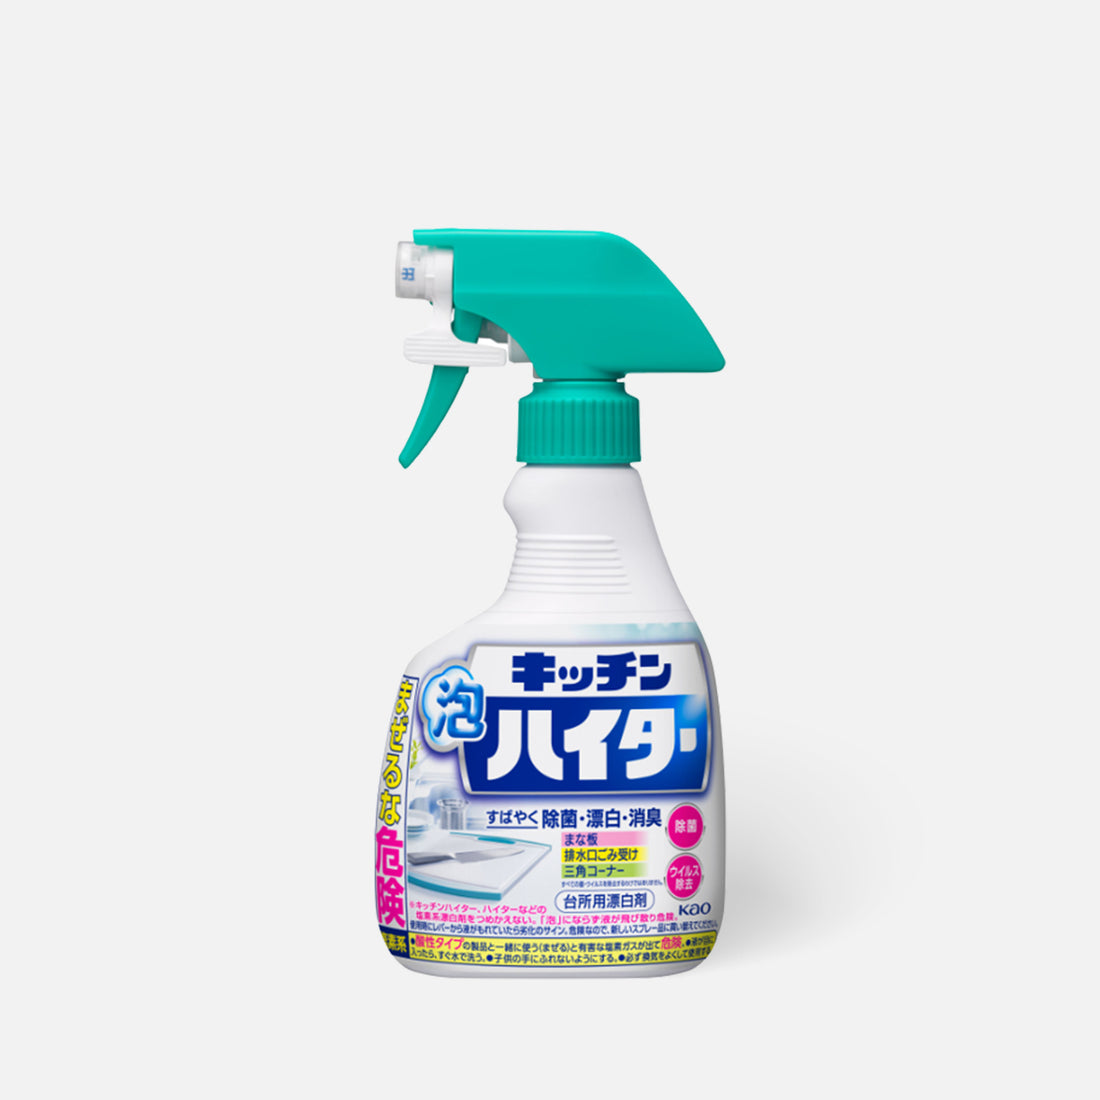 KAO Kitchen Bleach Handy Bleach Foam Spray Cleaner 400ml